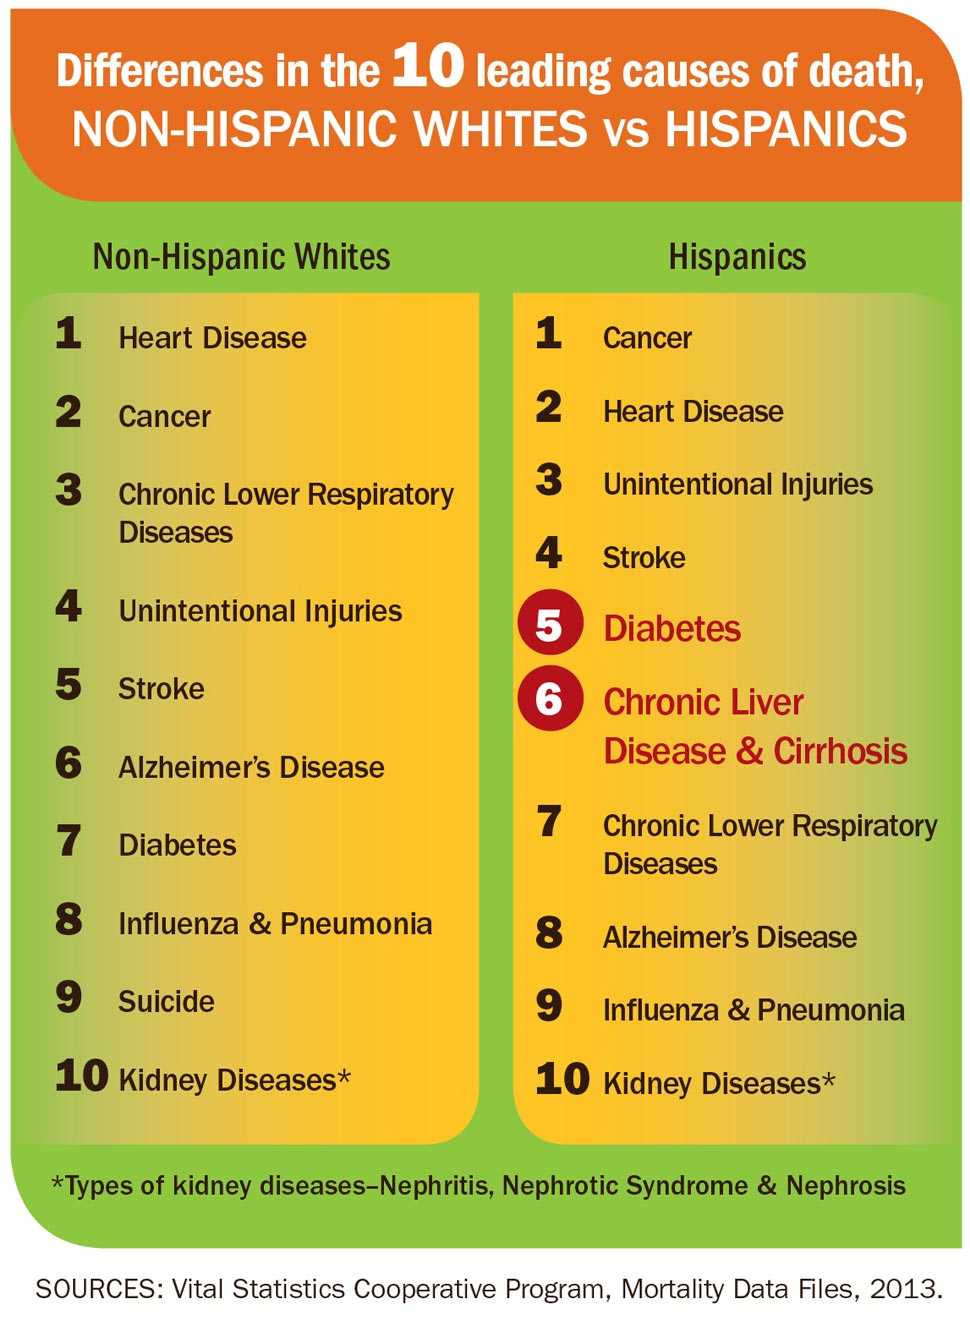 Differences in the 10 leading causes of death, NON-HISPANIC WHITES vs HISPANICS